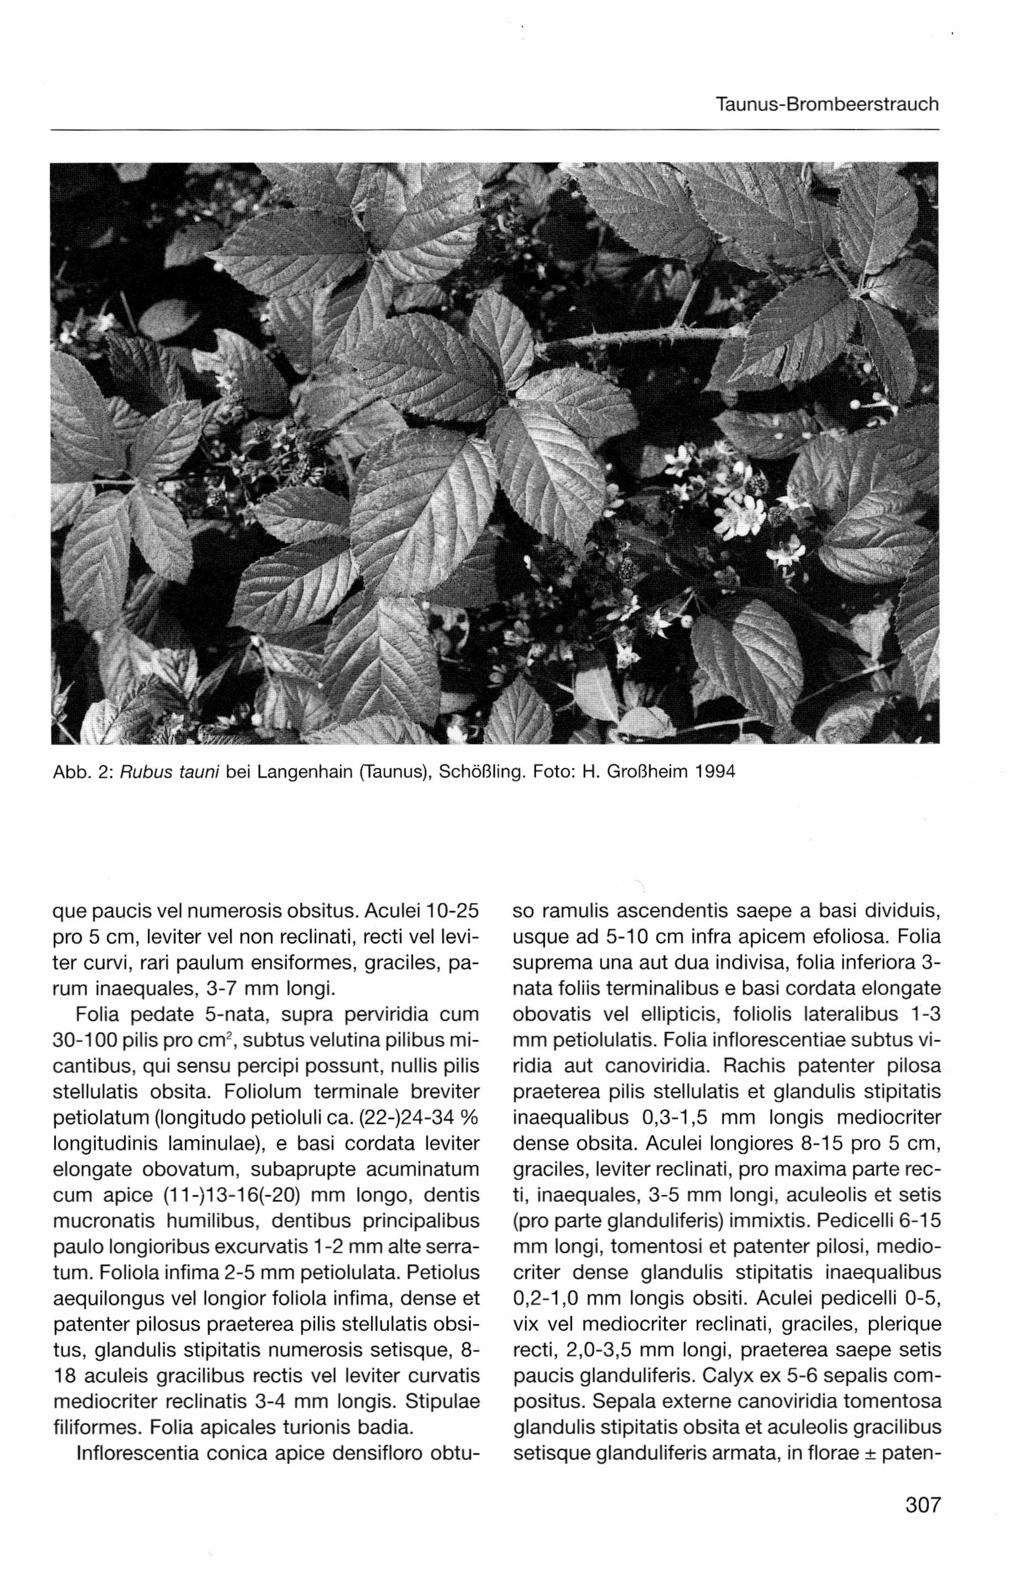 Taunus-Brombeerstrauch Abb. 2: Rubus teuni bei Langenhain (Taunus),Schößling. Foto: H. Großheim 1994 que paucis vel numerosis obsitus.